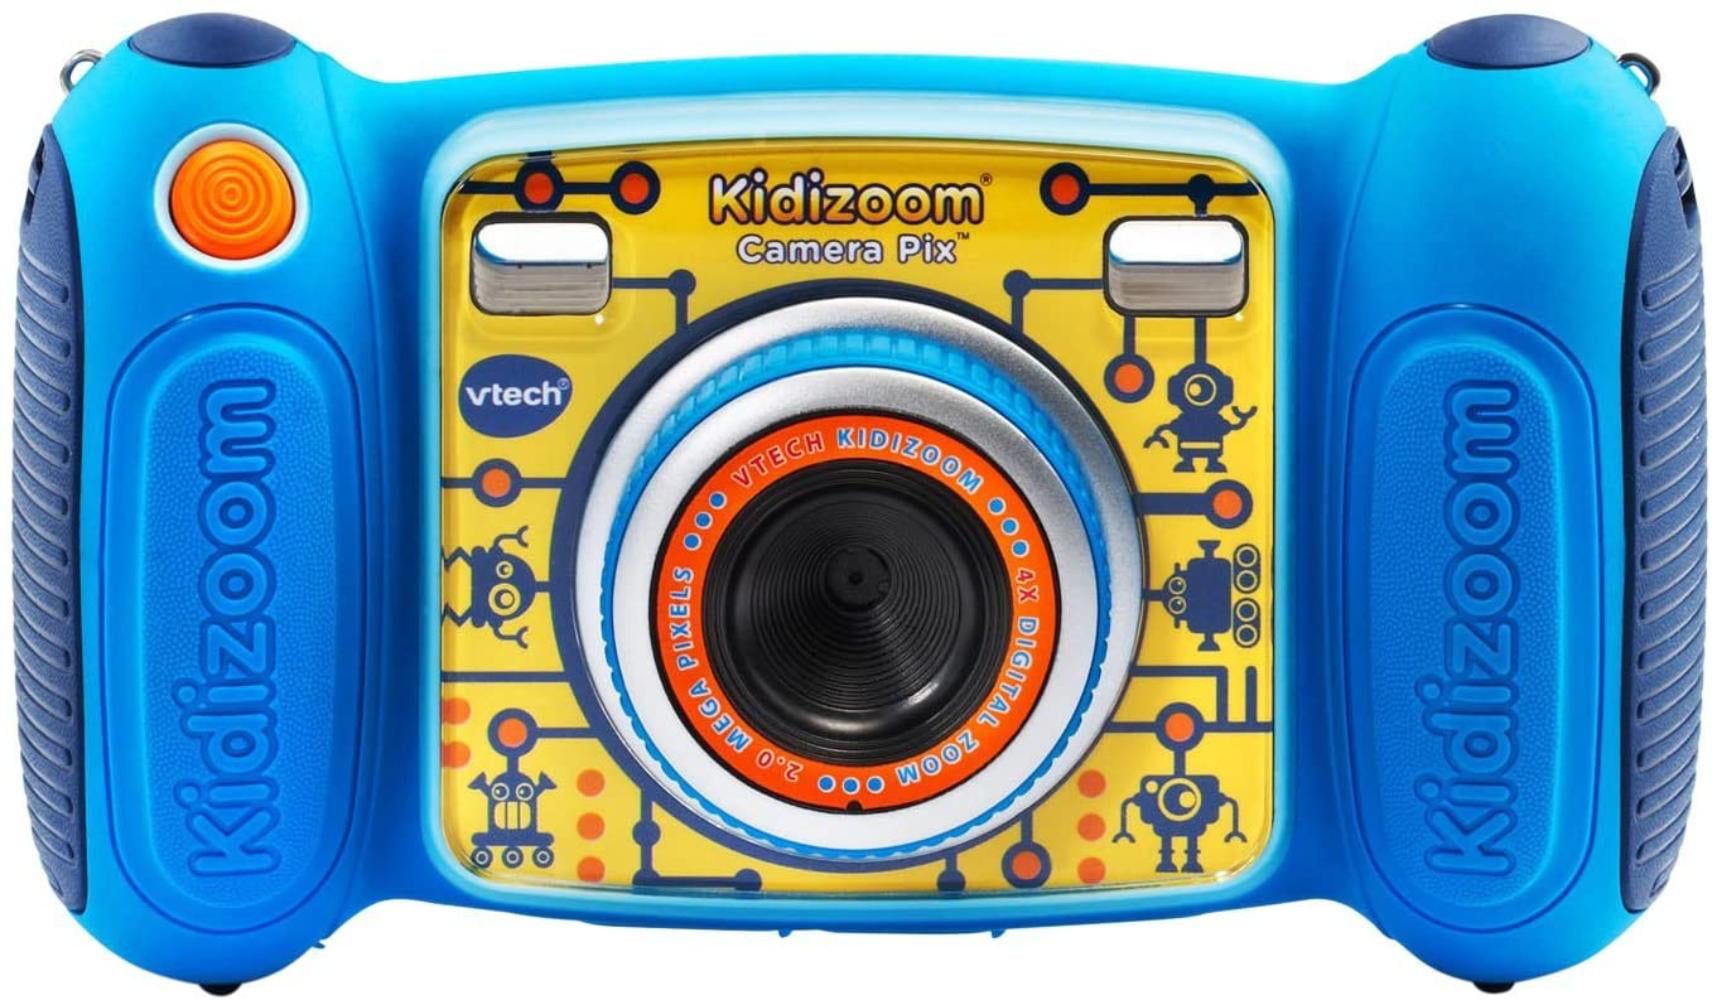 2020 HOT GIFT VTech KidiZoom Creator Cam HD Video Kids Digital Camera Model 5318 